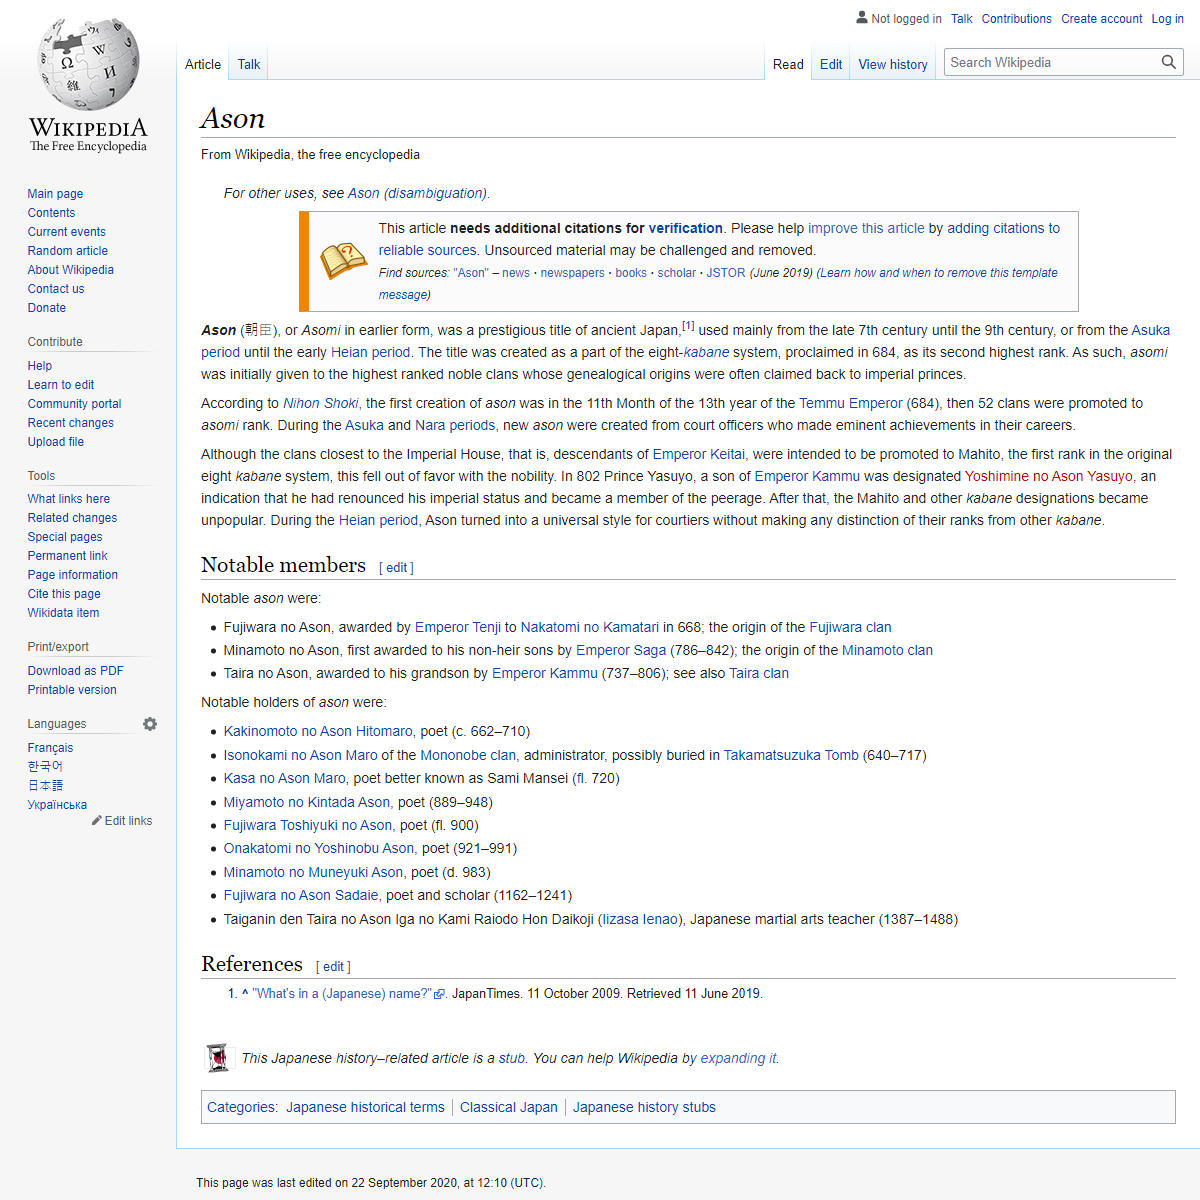 A complete backup of https://en.wikipedia.org/wiki/Ason